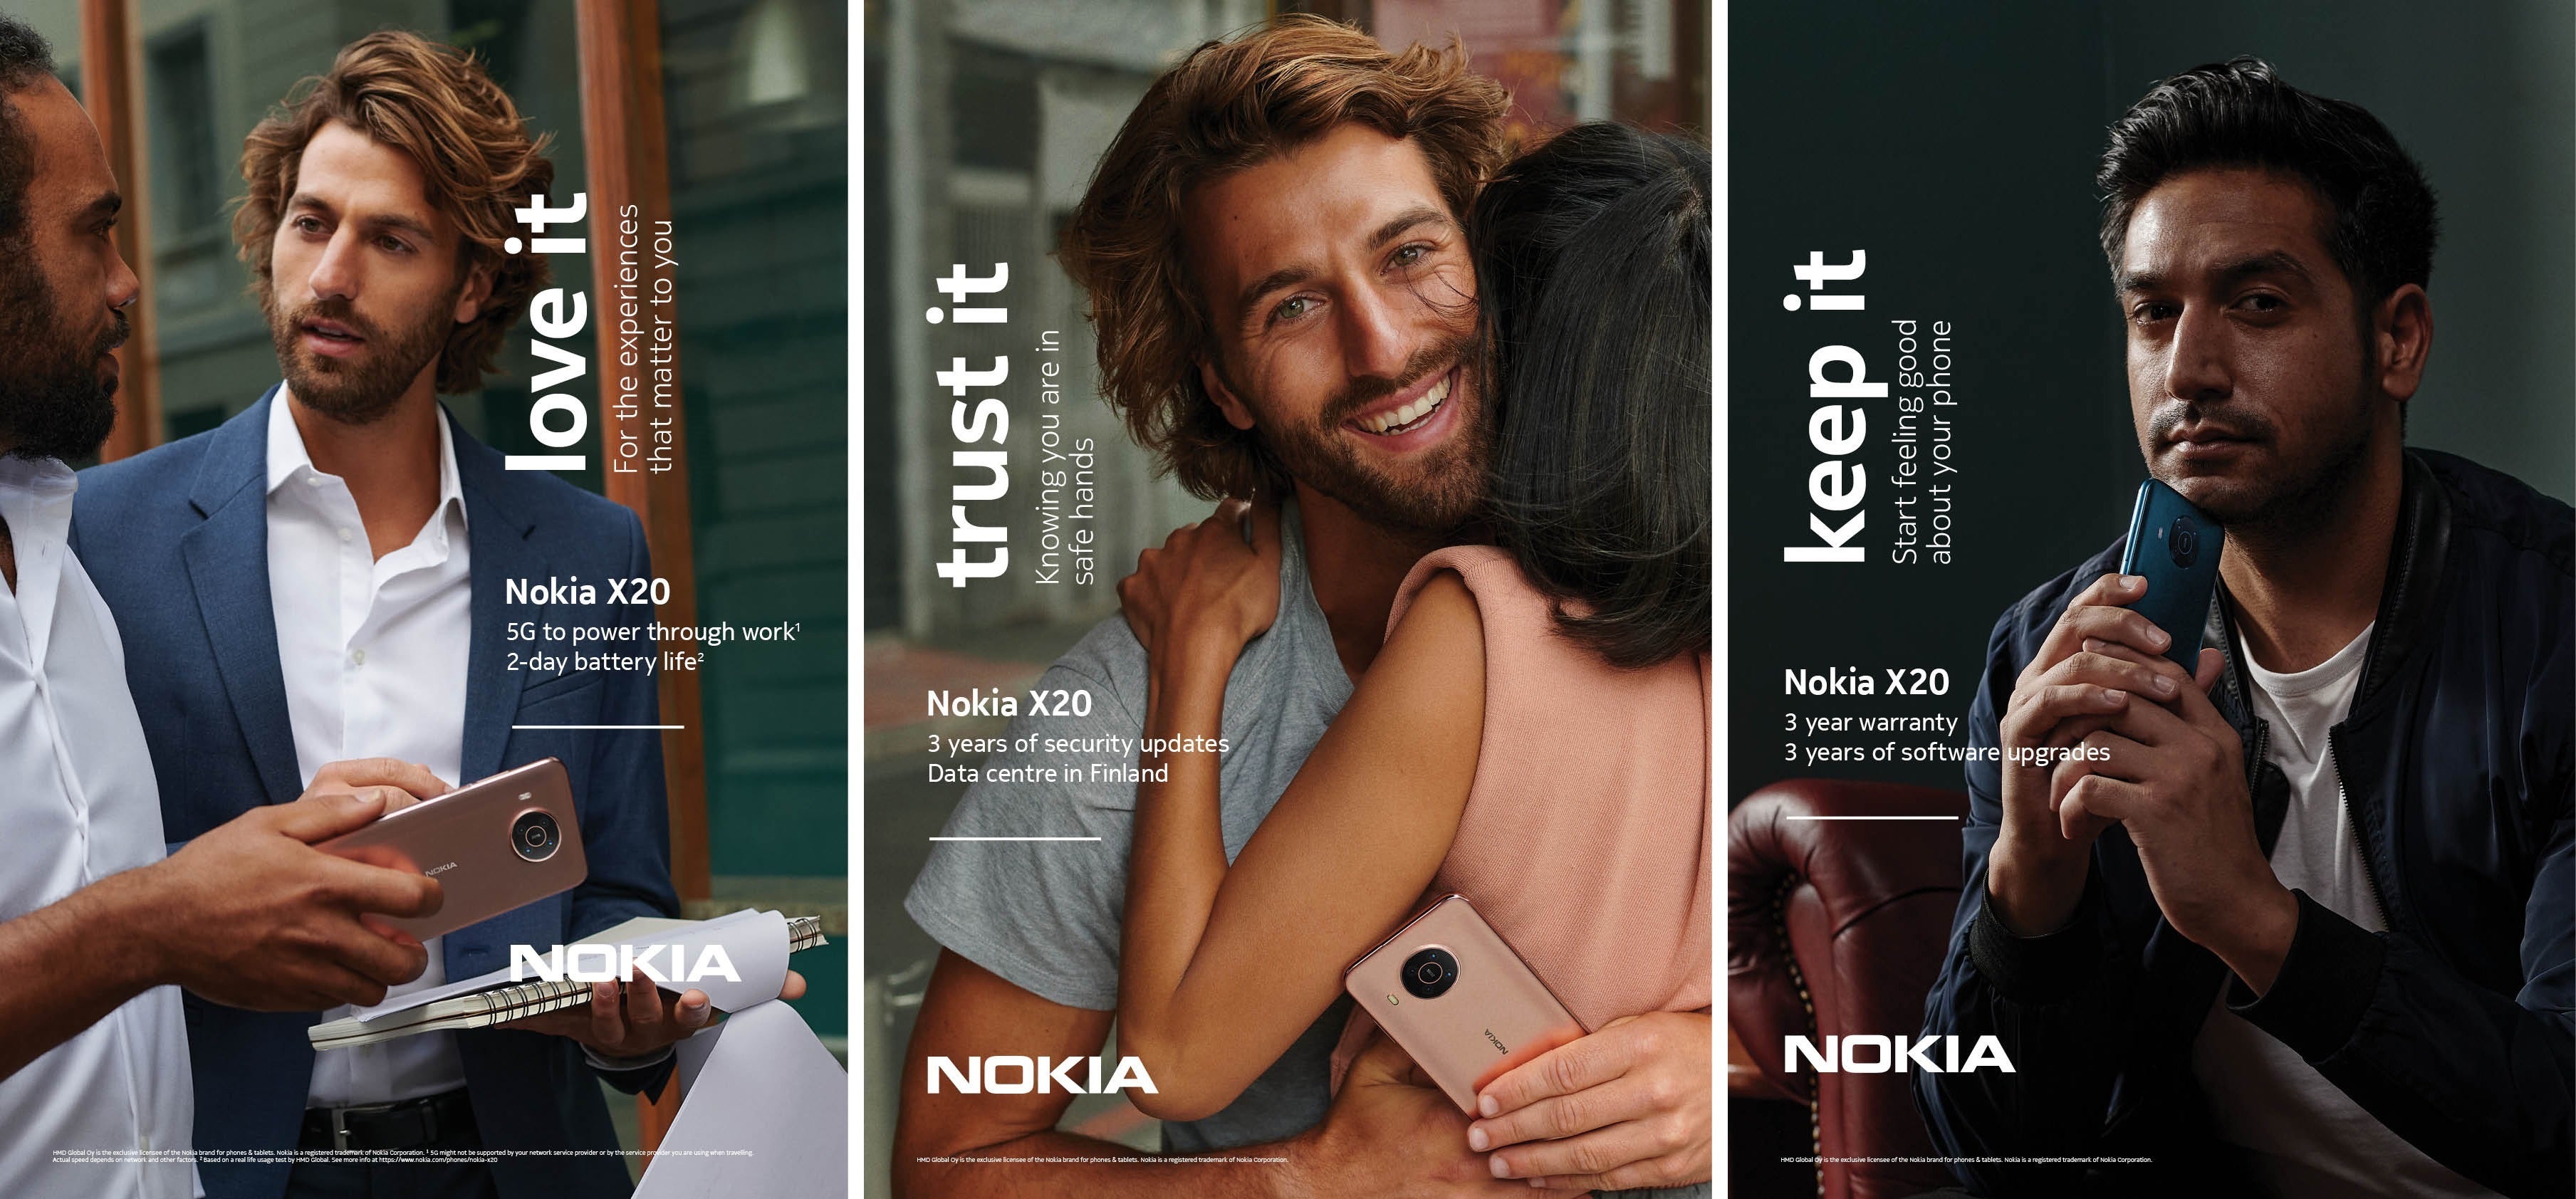 Nokia X20 promo material - Nokia's biggest phone launch introduces 6 new phones, built to last